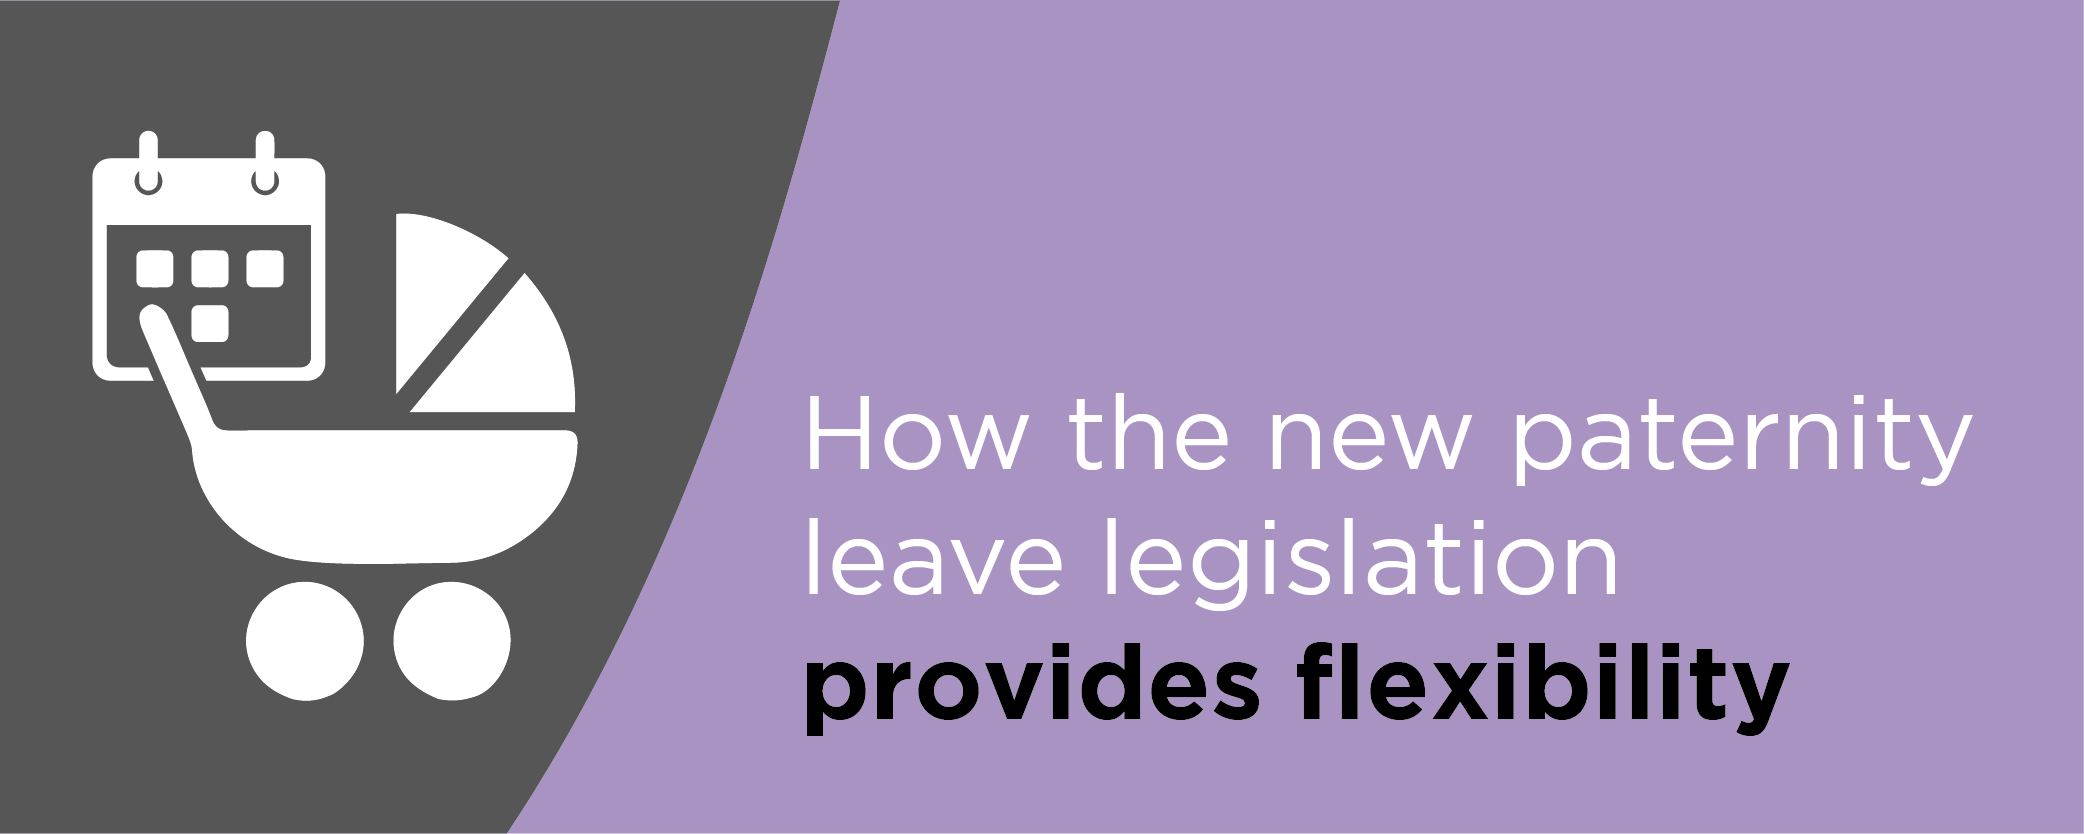 How the new paternity leave legislation provides flexibility